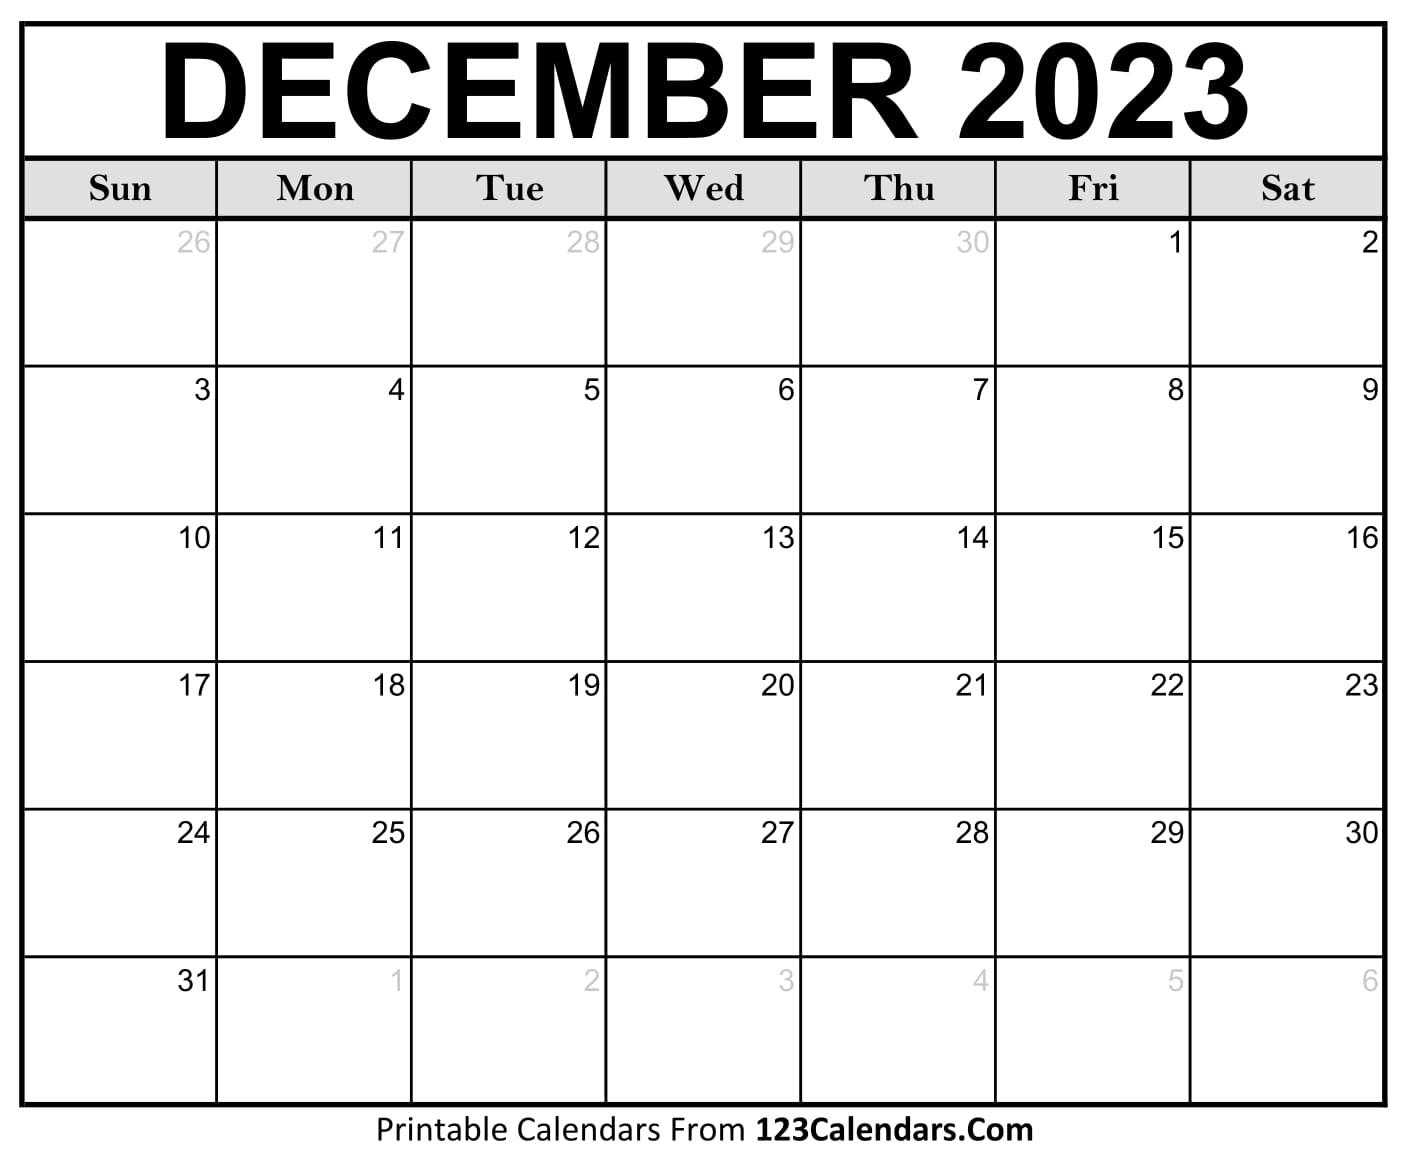 printable-december-2023-calendar-templates-123calendars